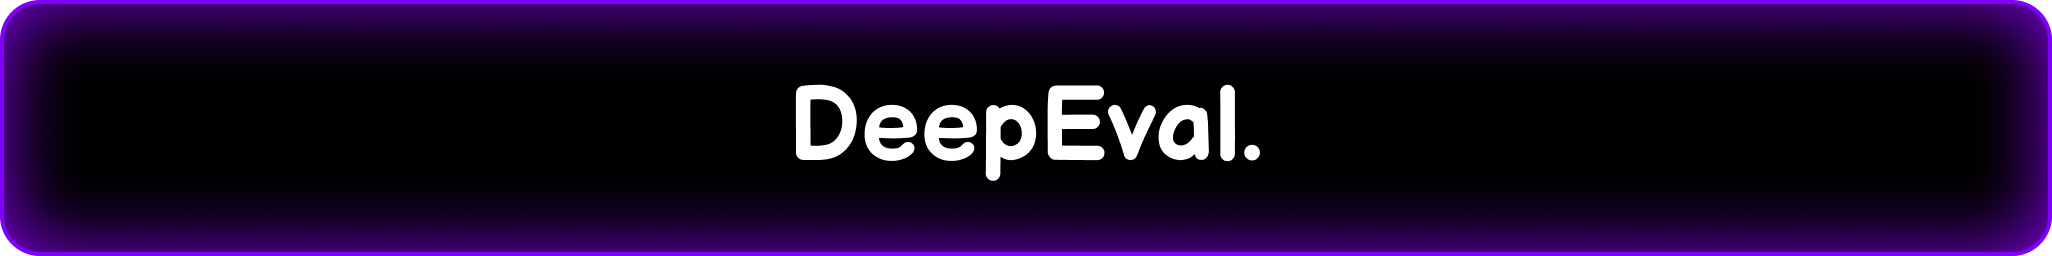 DeepEval Logo